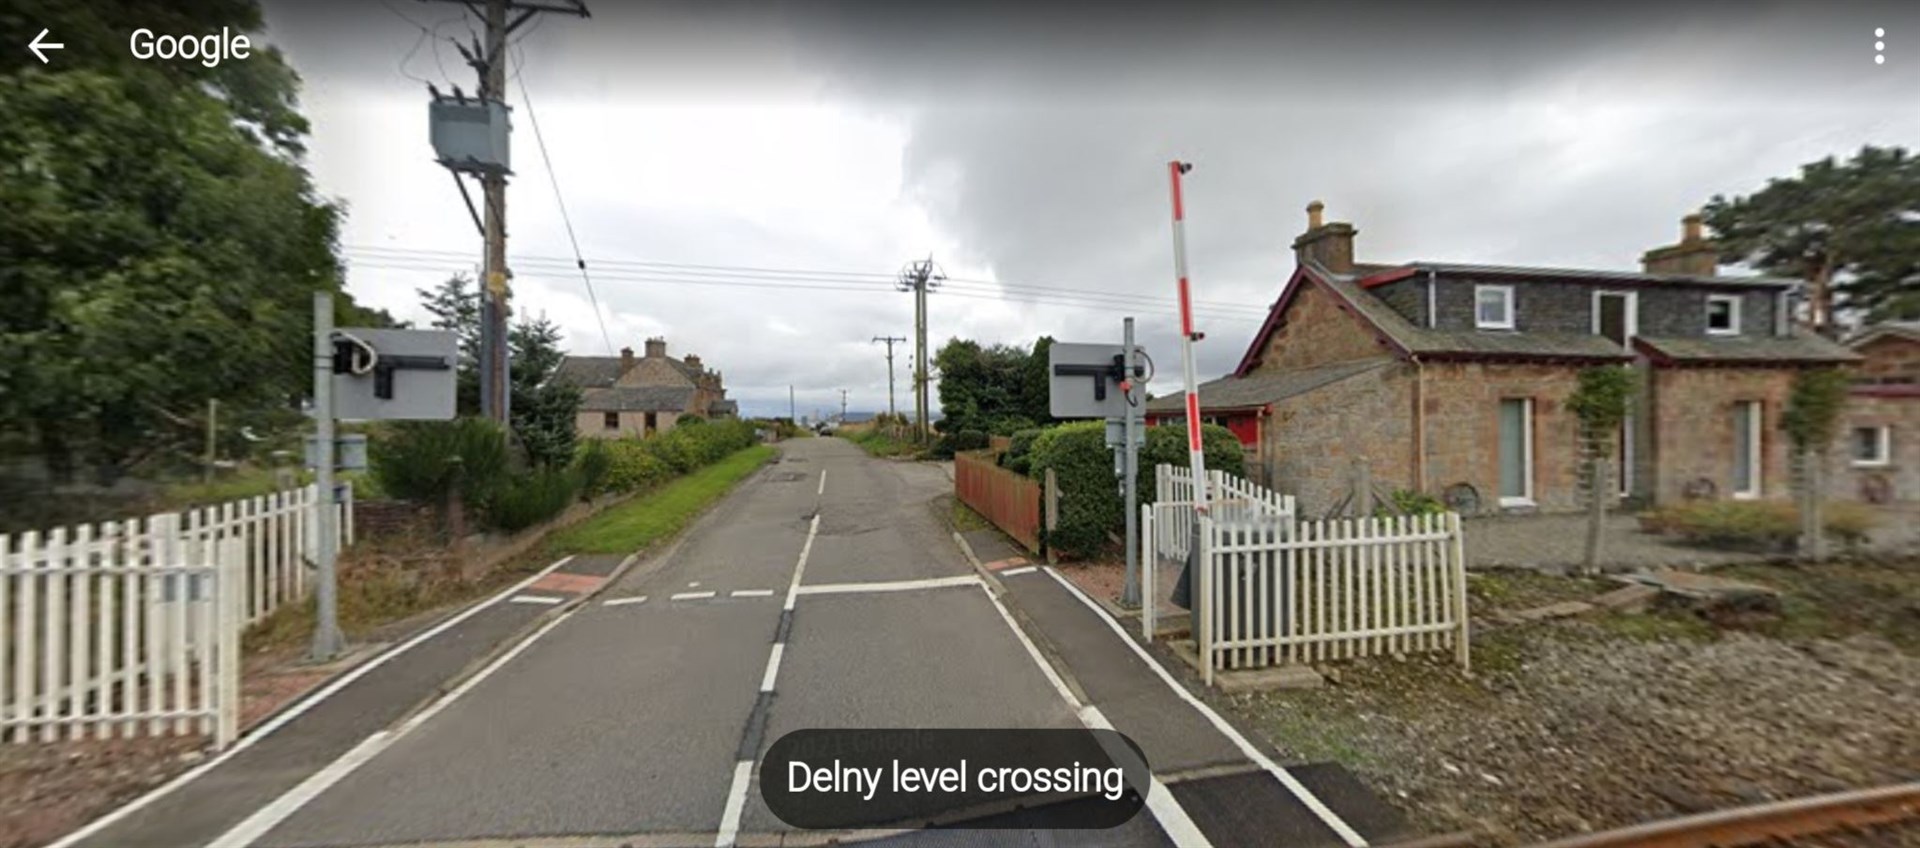 Delny level crossing